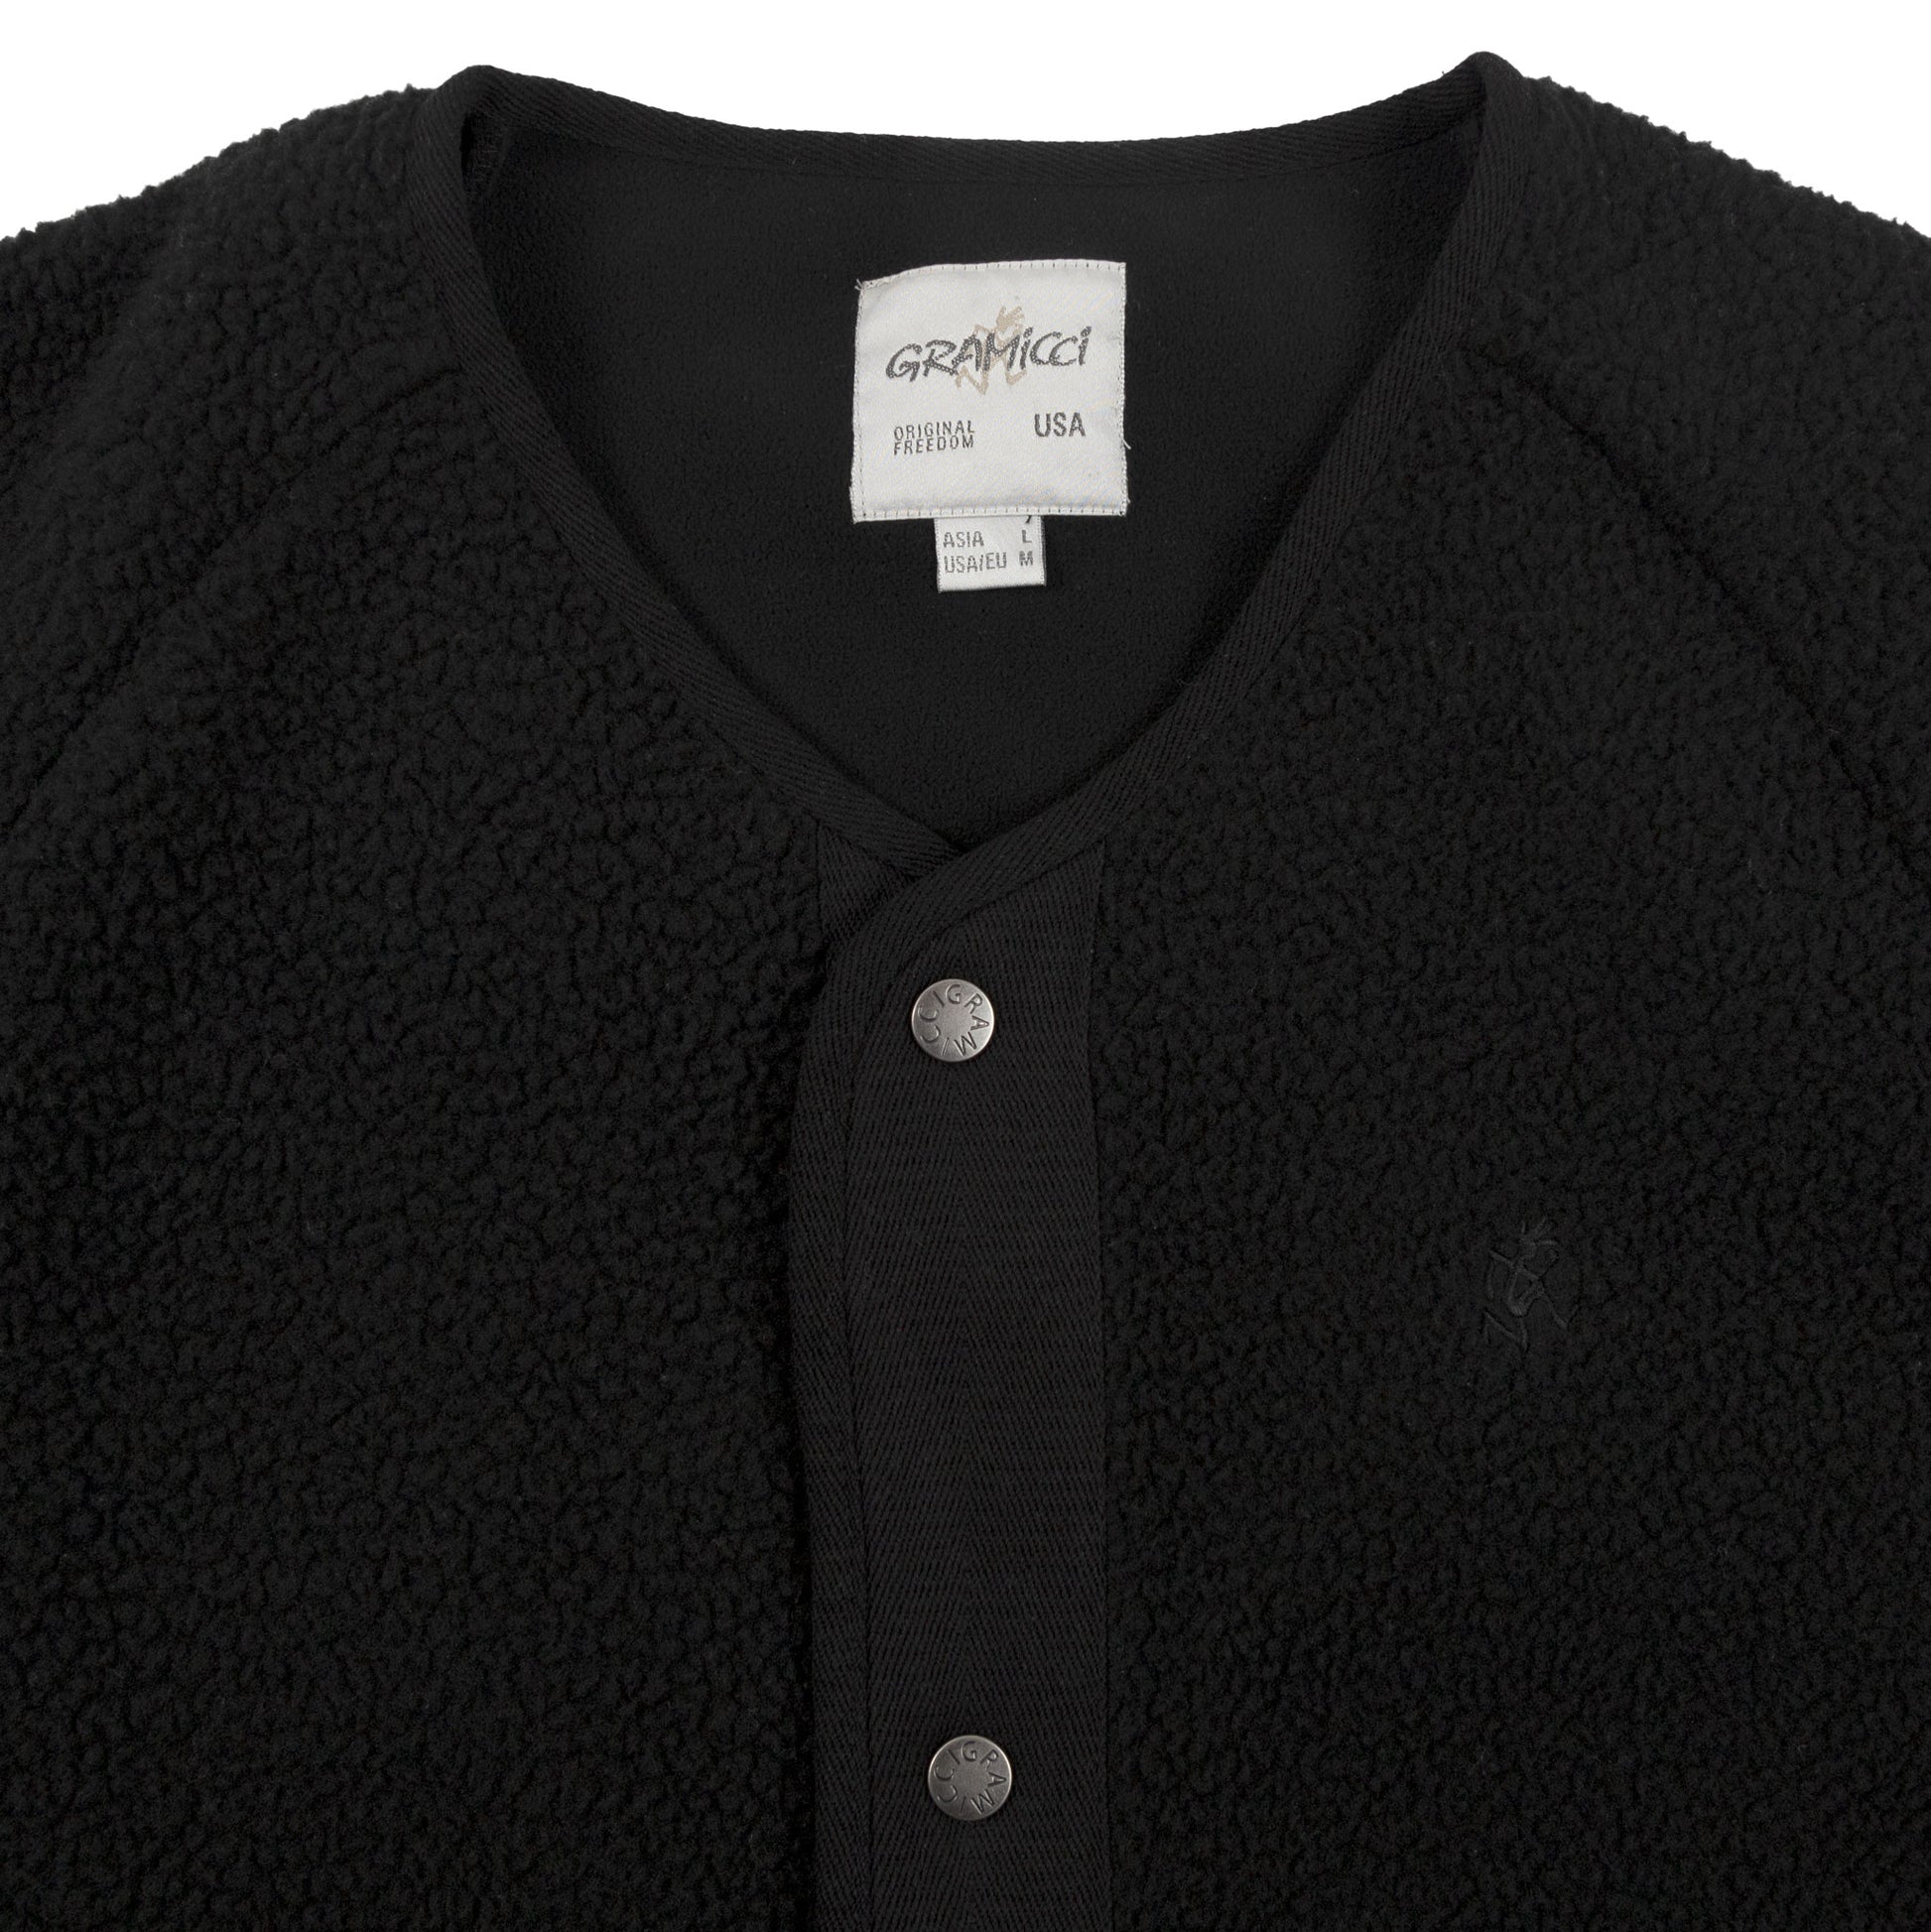 Gramicci Boa Fleece Jacket in Black outer wear warm collar